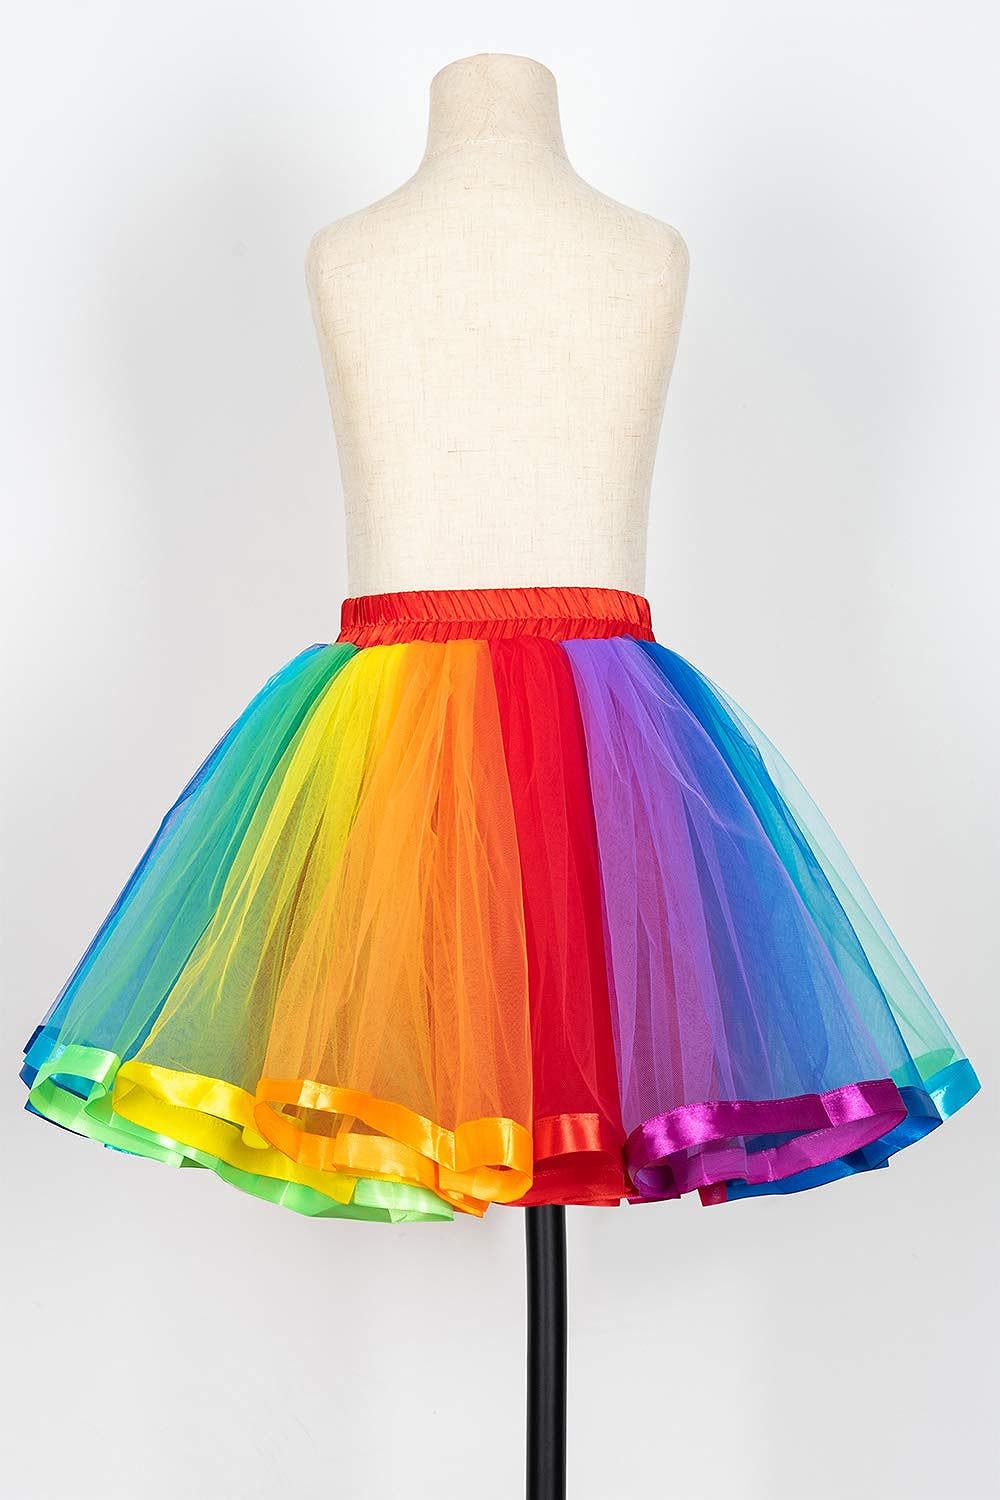 MisShow Womens Rainbow Tutu Skirt Layered Tulle Skirt Girls Colorful Halloween Costumes Tutu